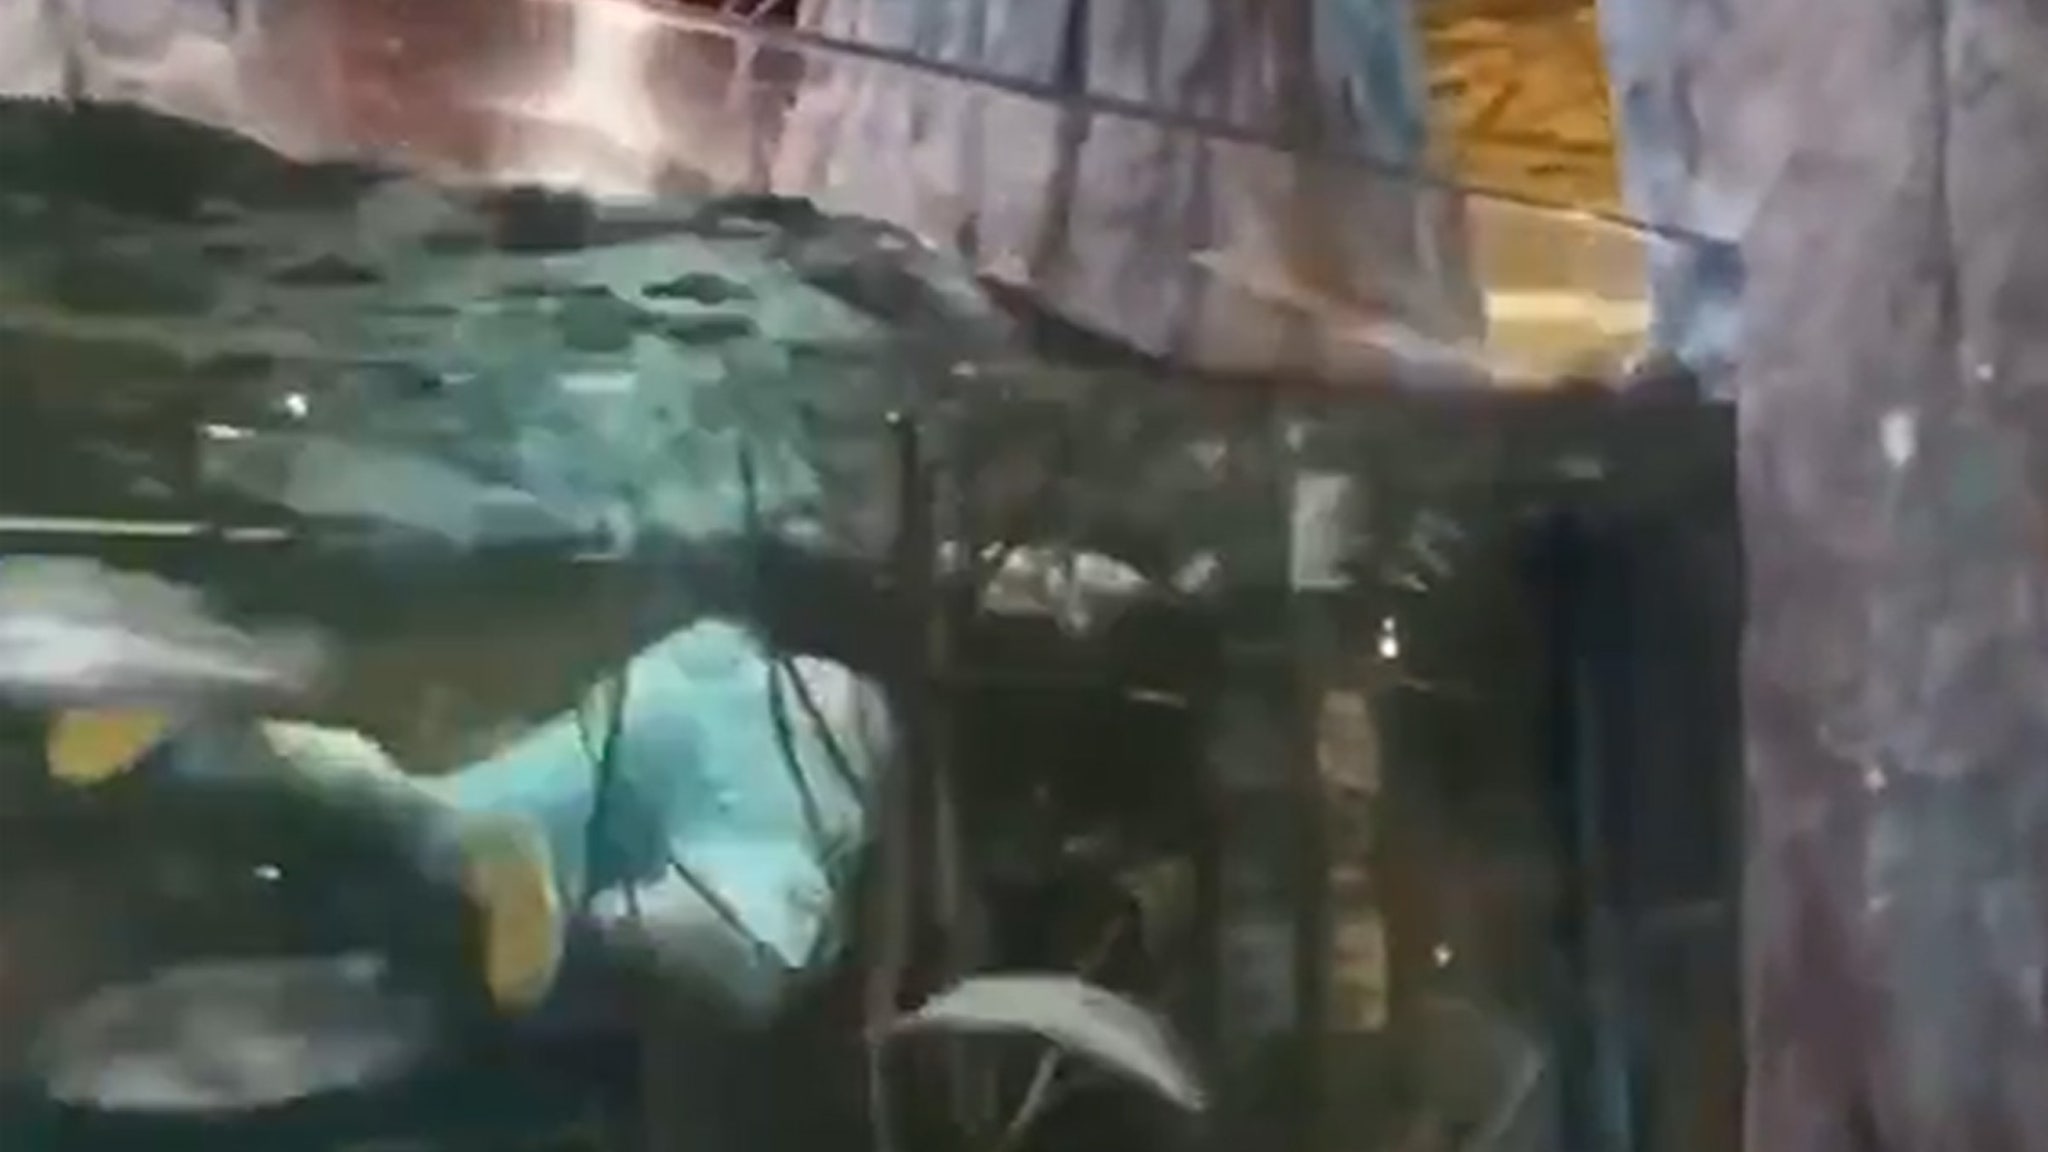 Man Swims in Bass Pro Shop's Aquarium & Scrams, Cops on the Lookout